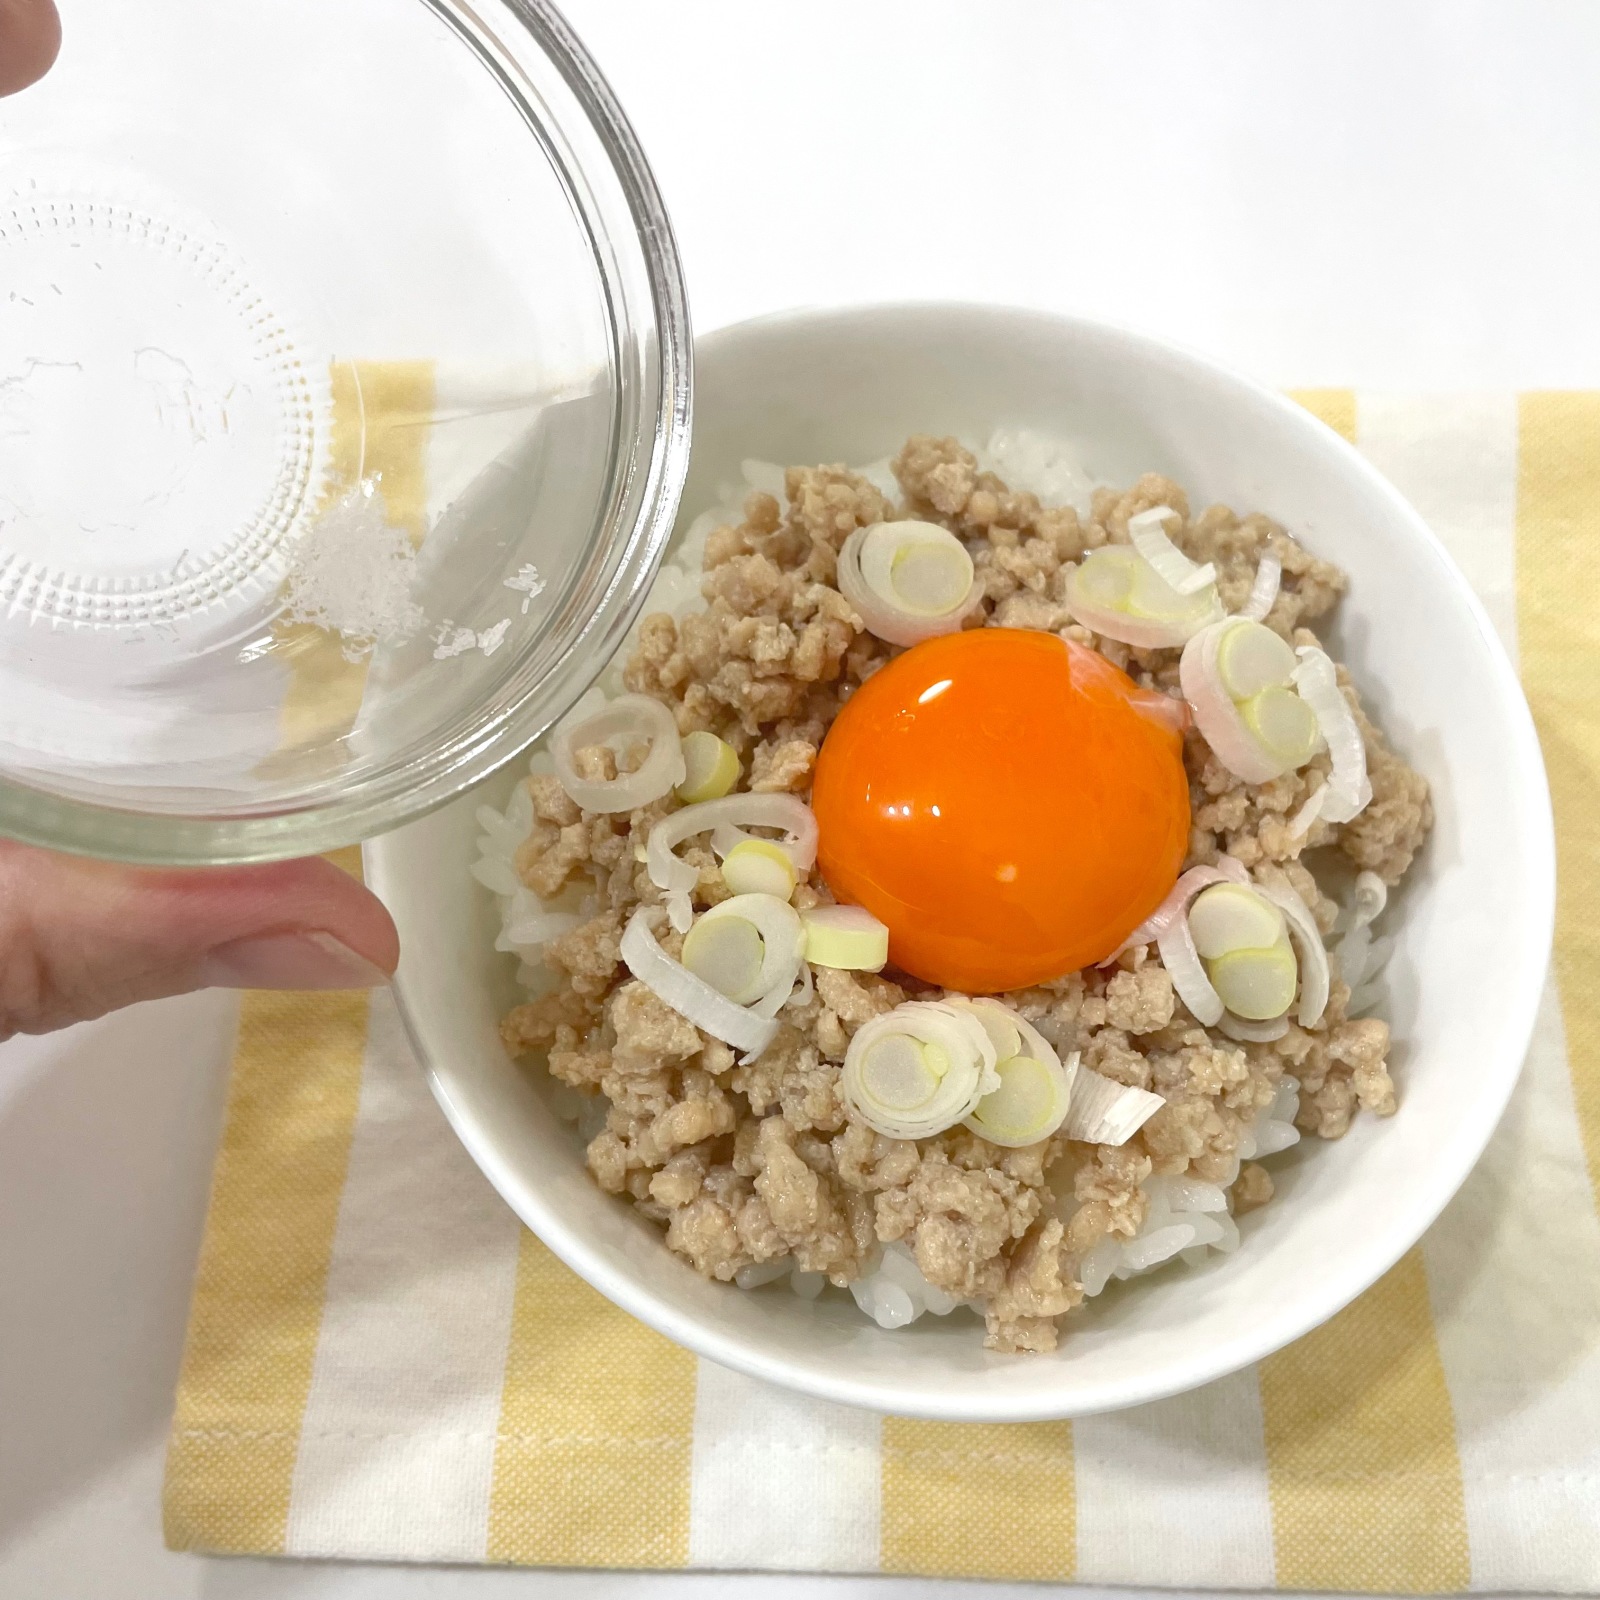 「UTKG（うま味卵かけご飯）」作り方5